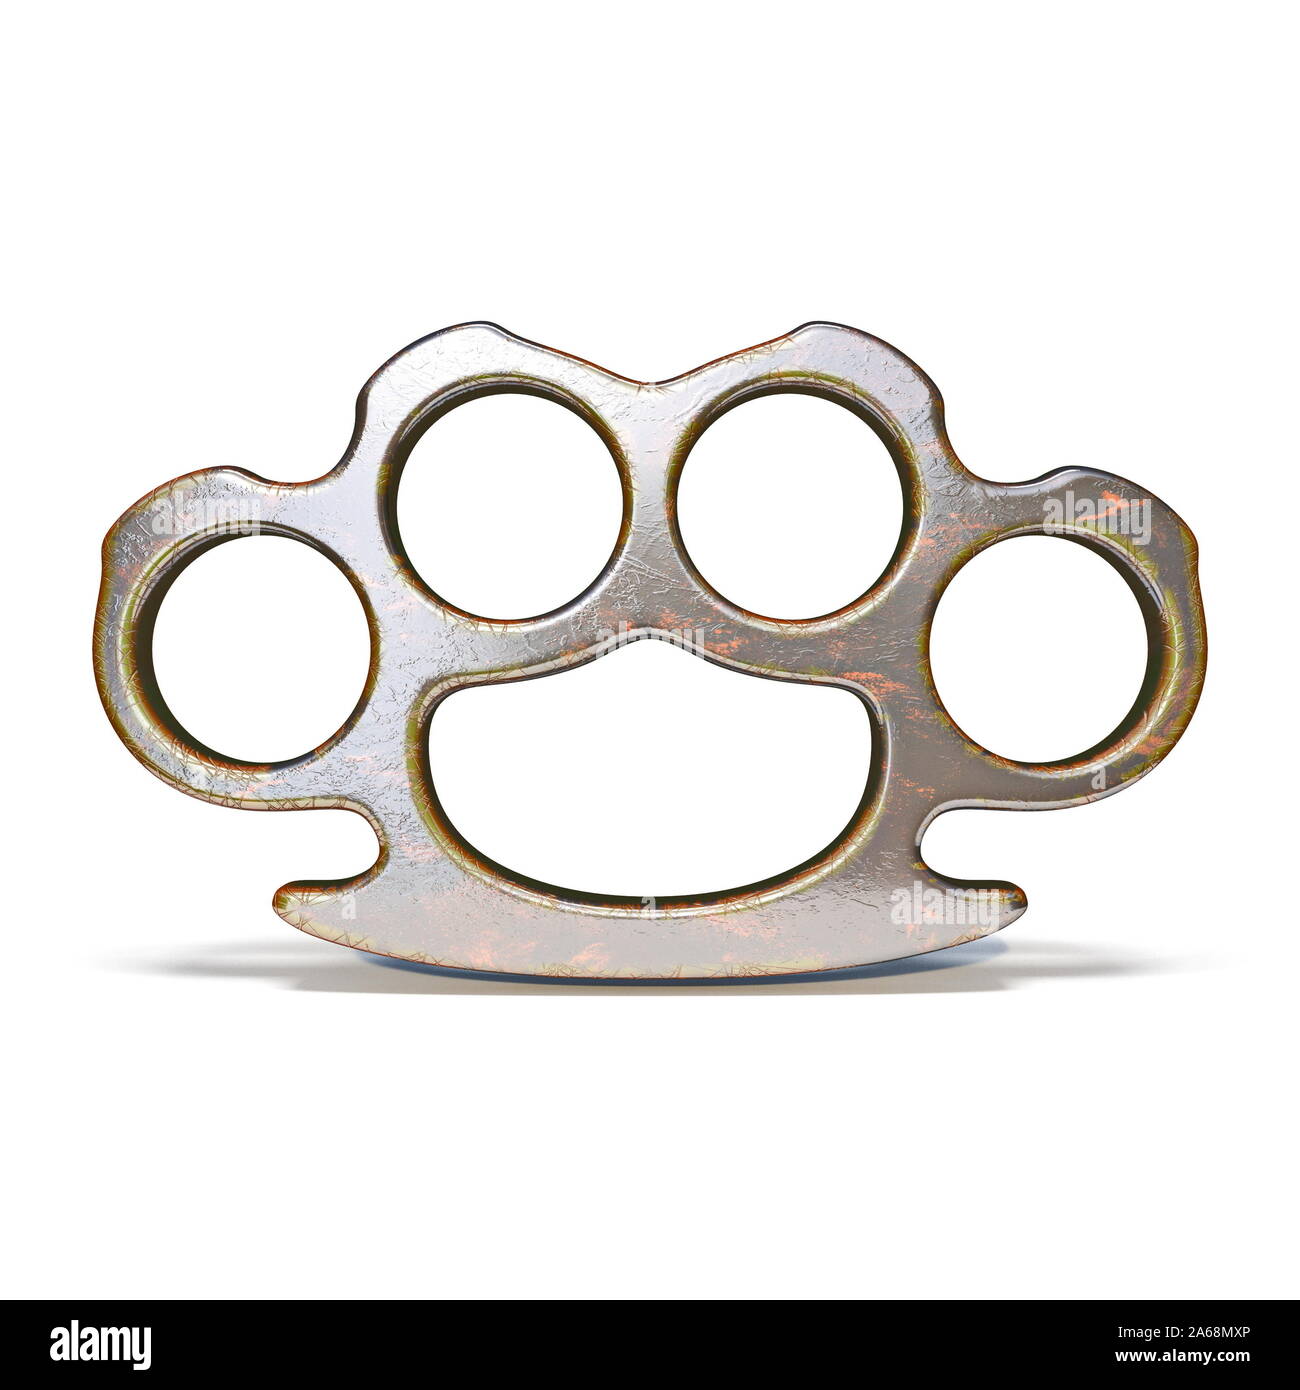 Brass knuckles 3D Stock Photo - Alamy